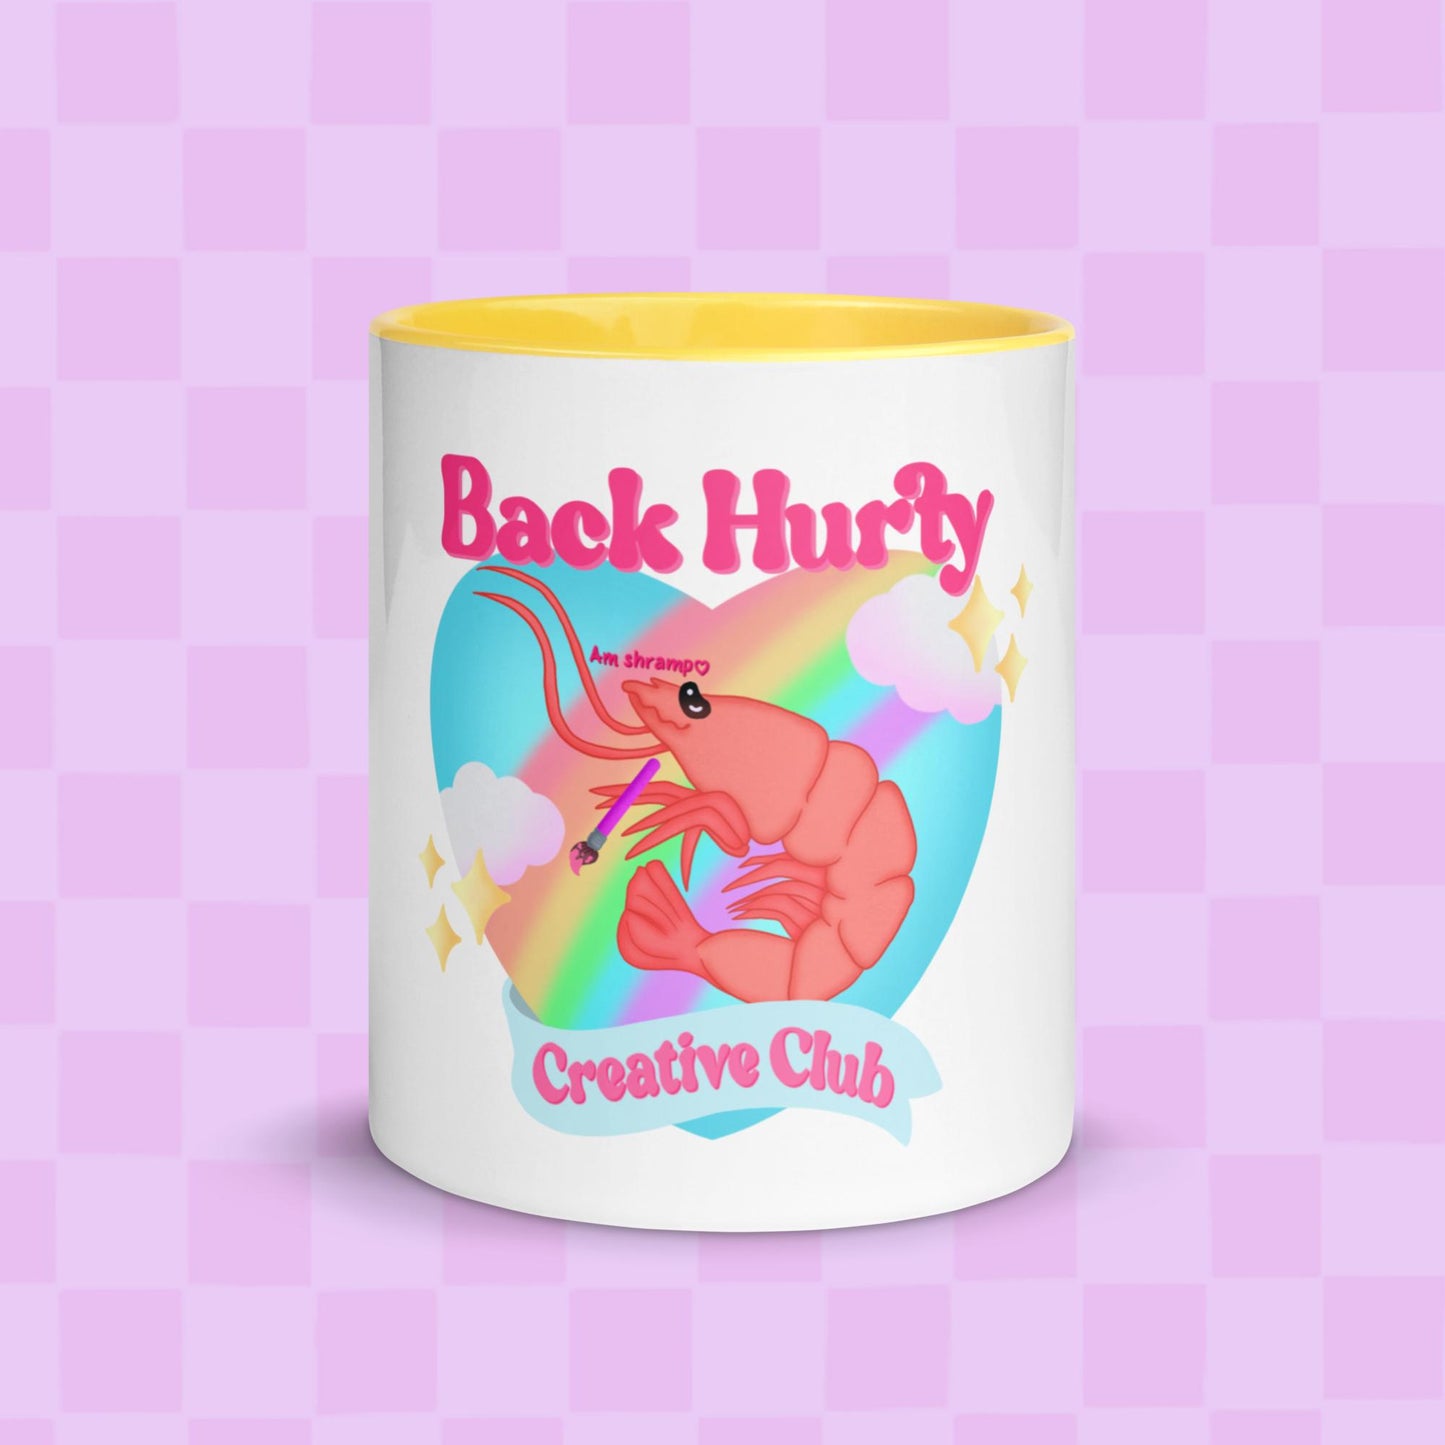 Back hurty mug with color inside